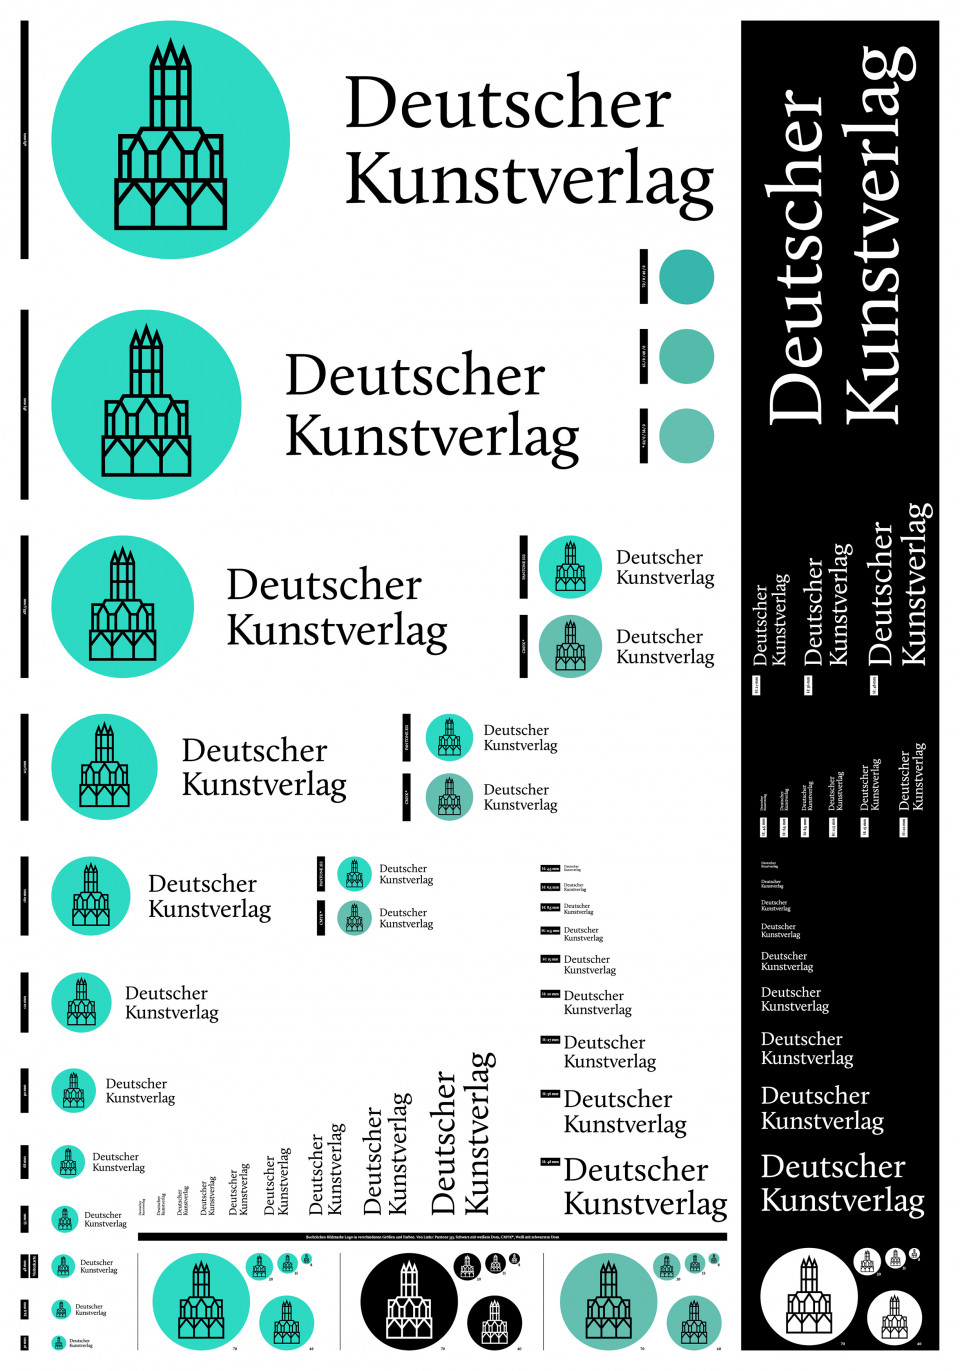 Deutscher Kunstverlag